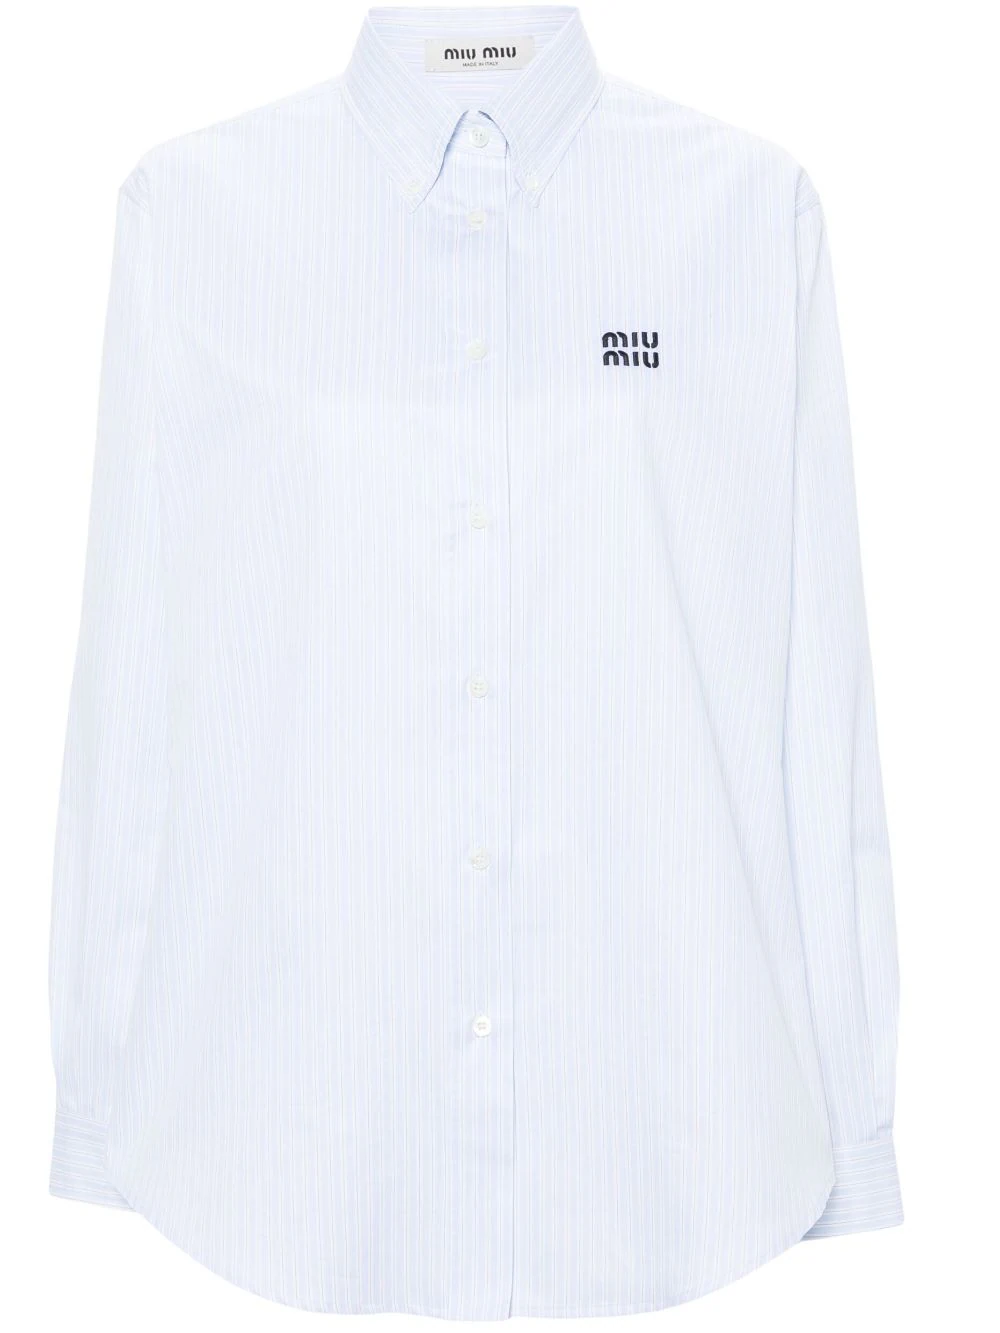 Miu Miu logo-embroidered striped shirt Discounts and Cashback